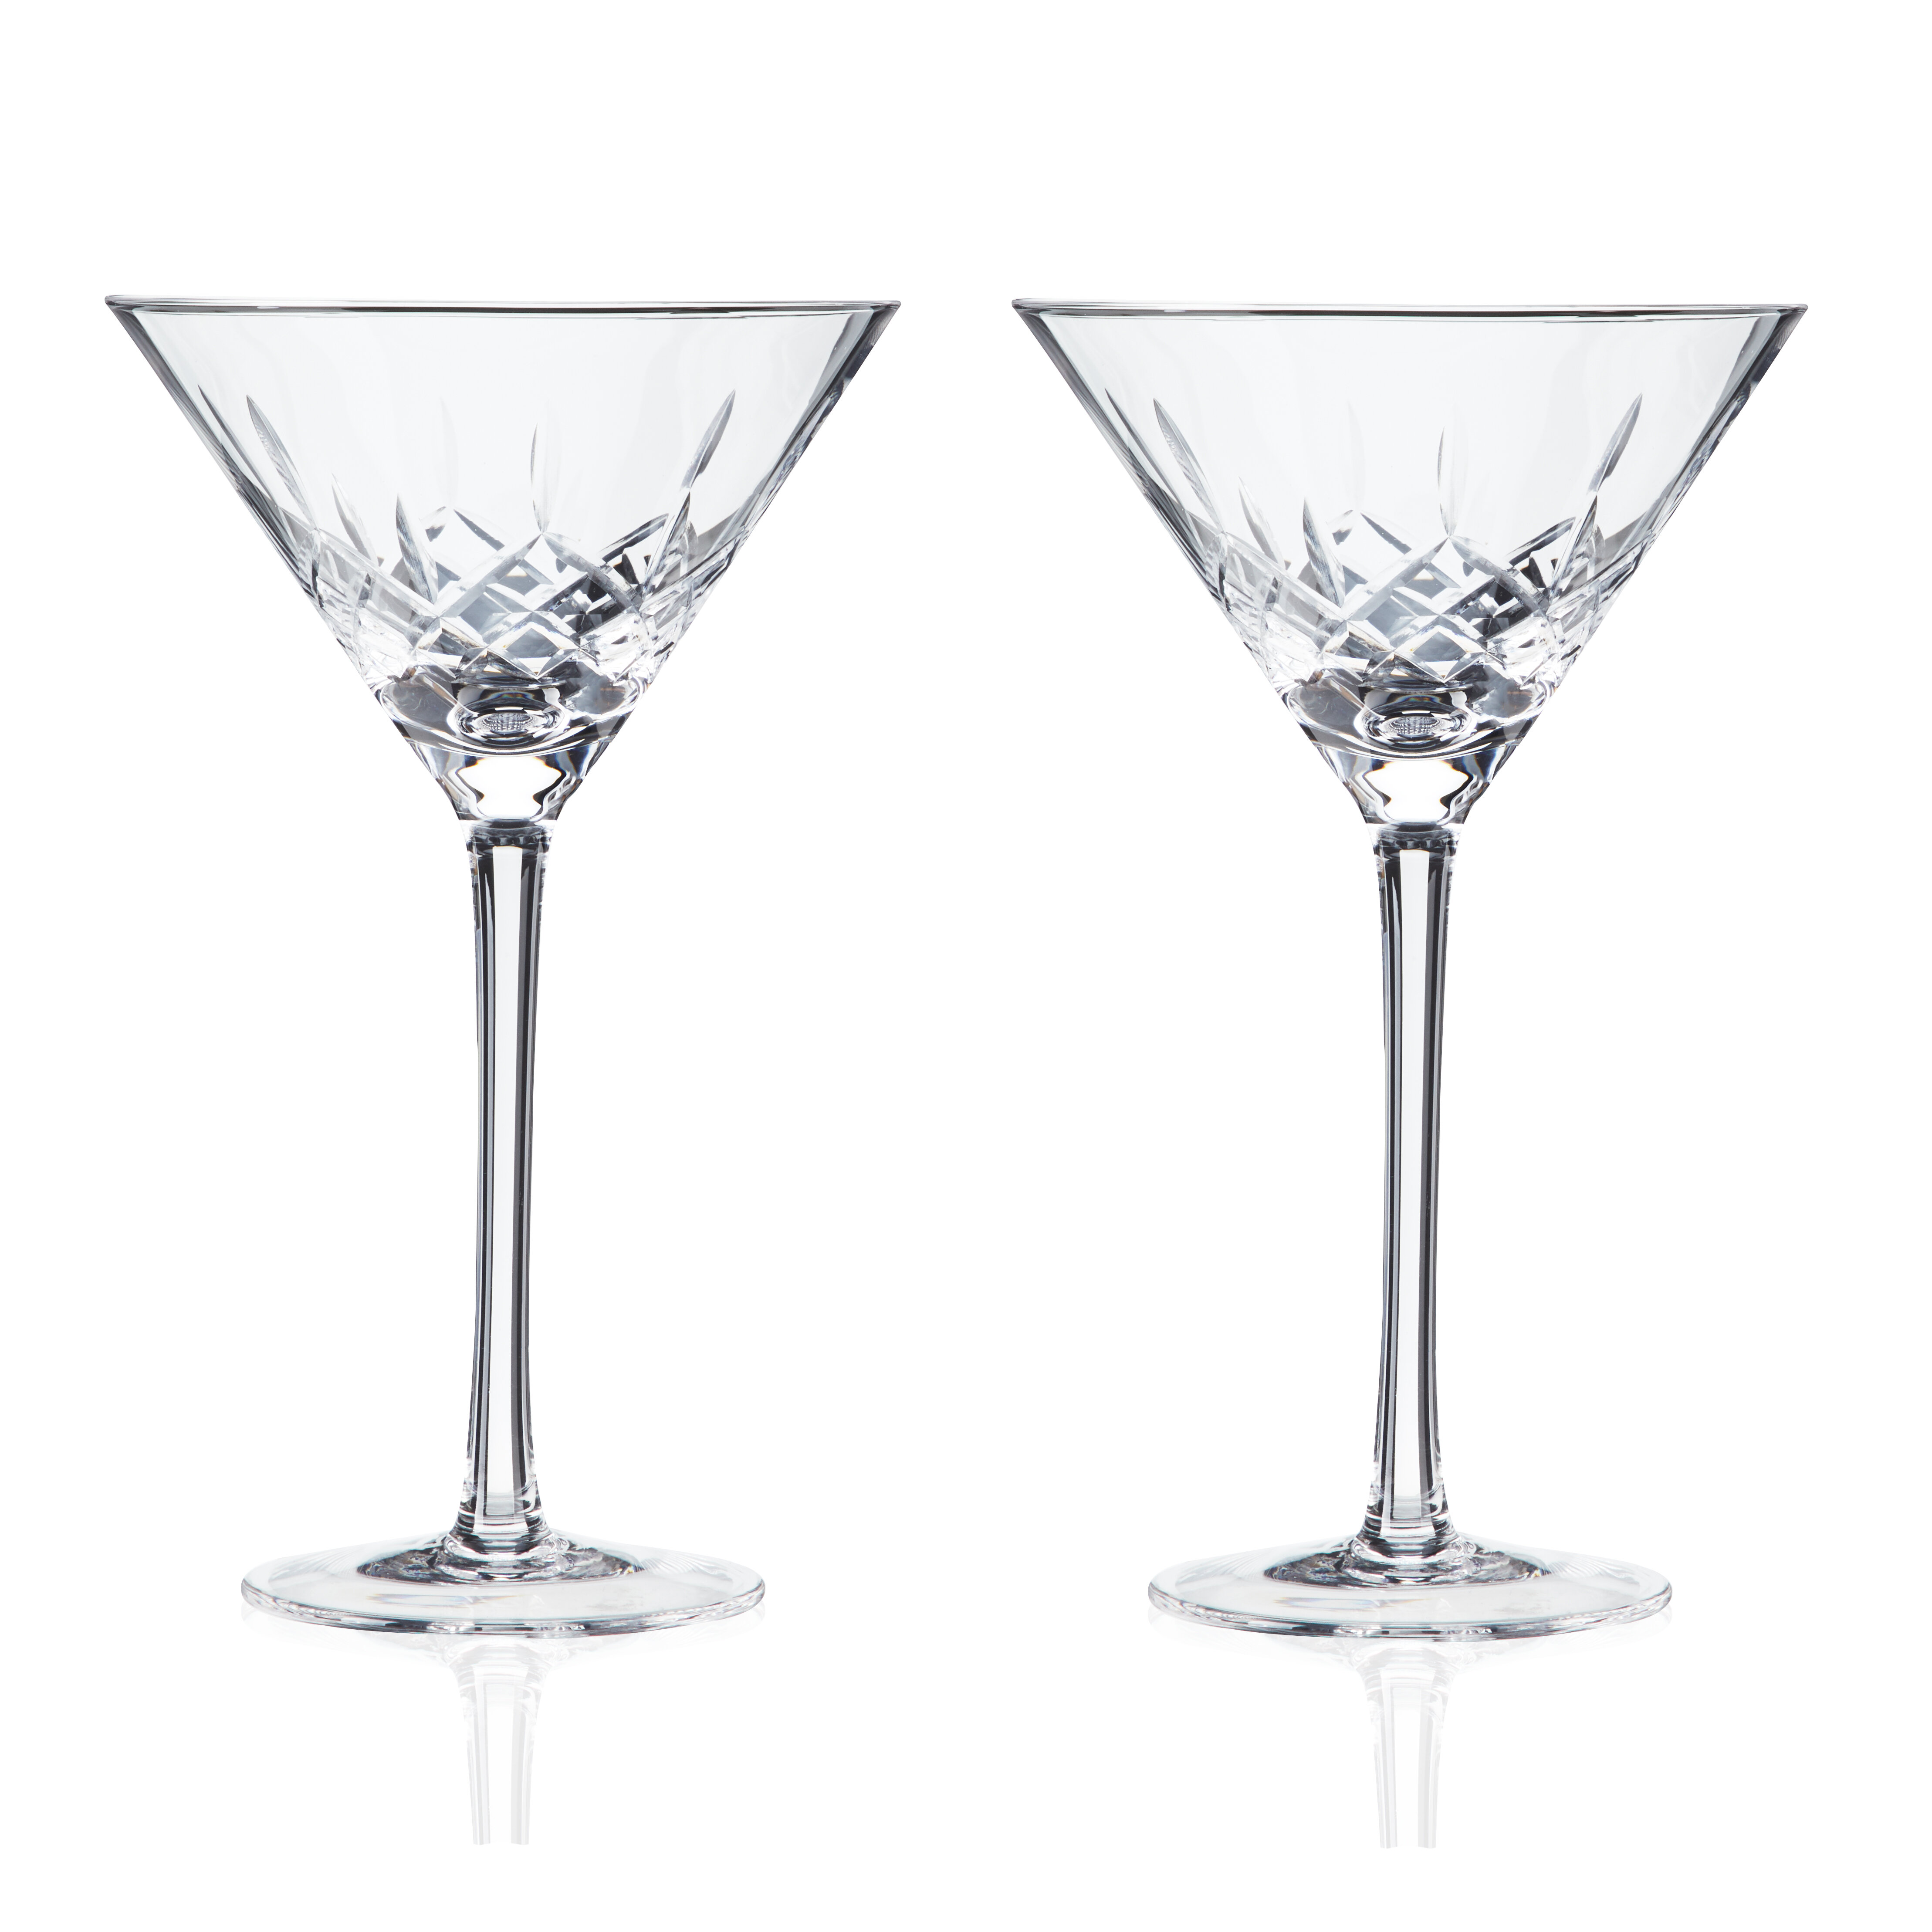 Viski - Premium Glassware and Barware